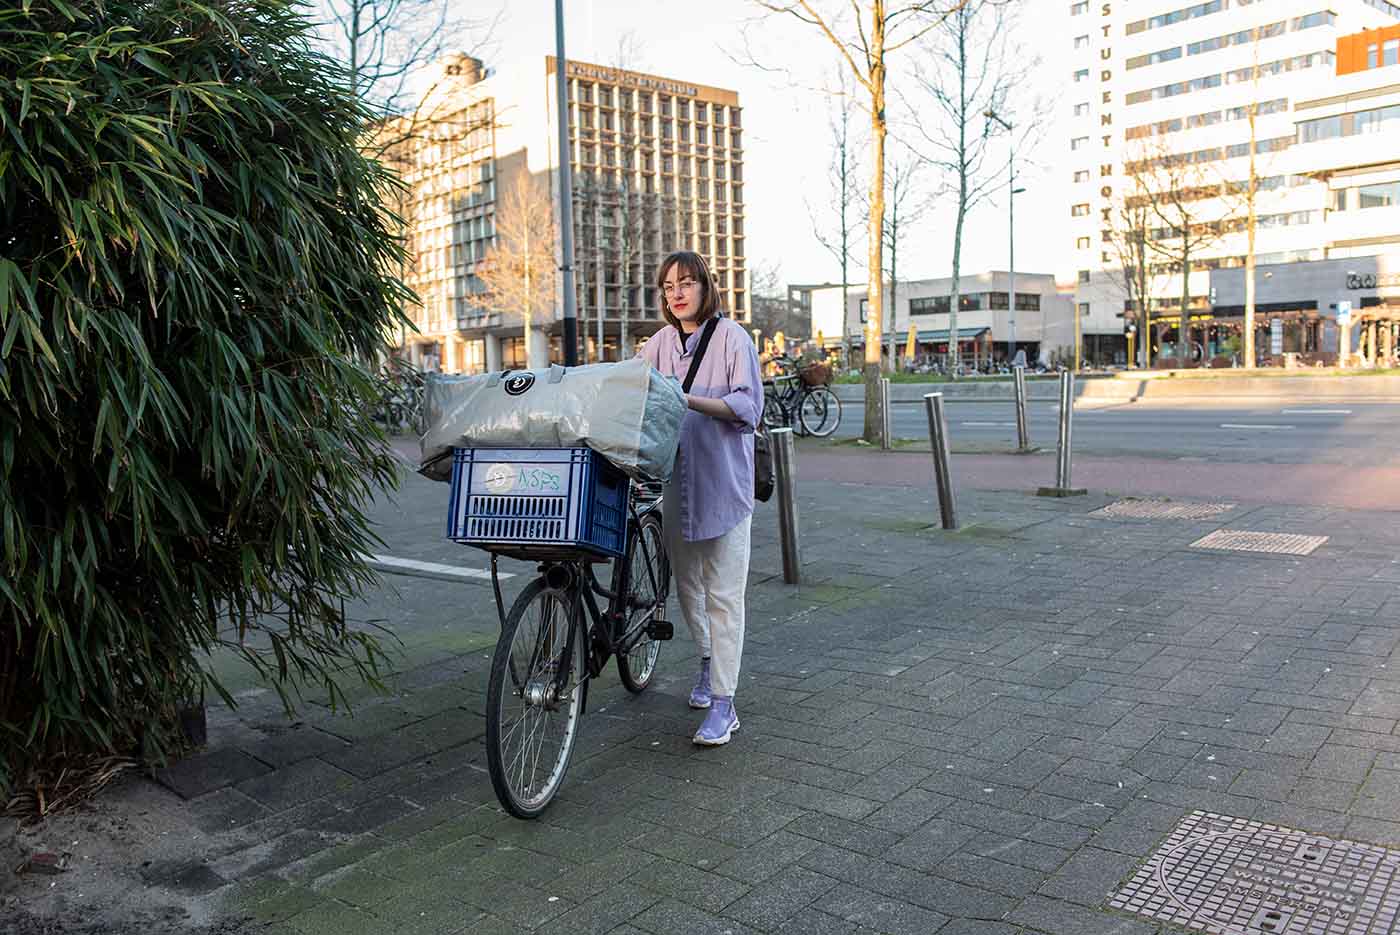 Zsofia Kollar on her bike with a bag of human hair waste